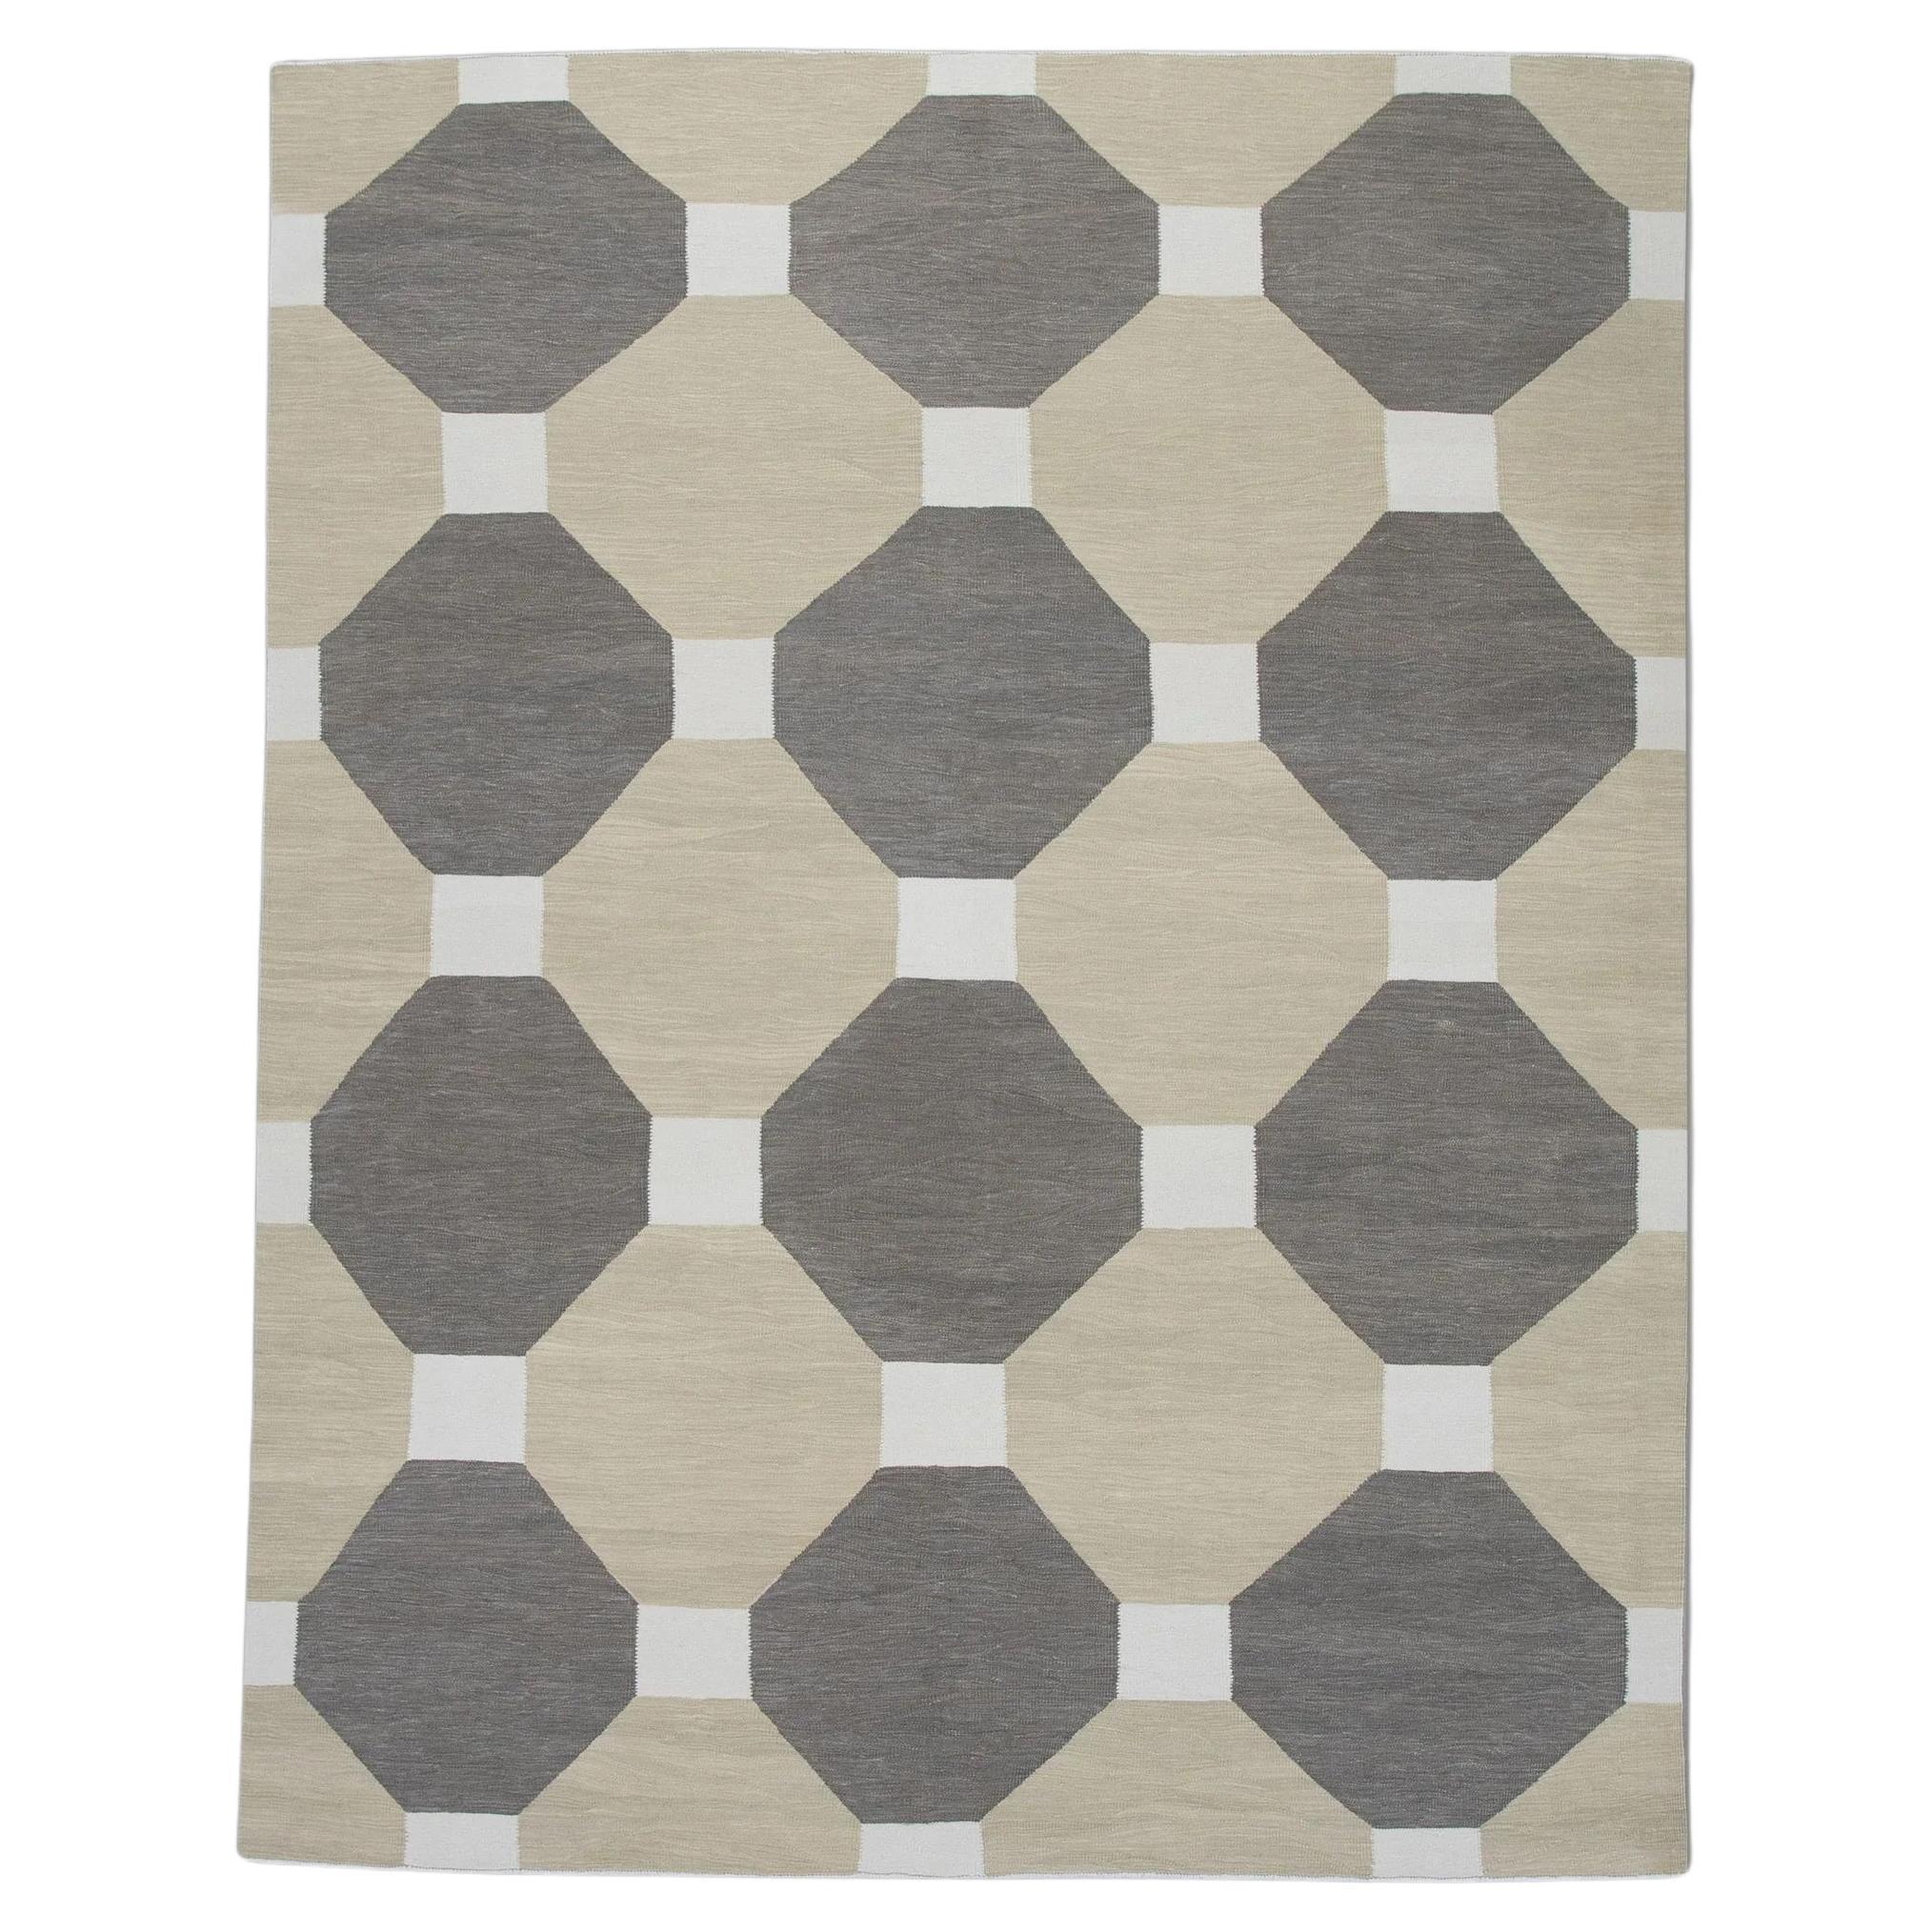 Tan and Brown Flatweave Handmade Wool Rug in Geometric Pattern 8' X 10'4" For Sale